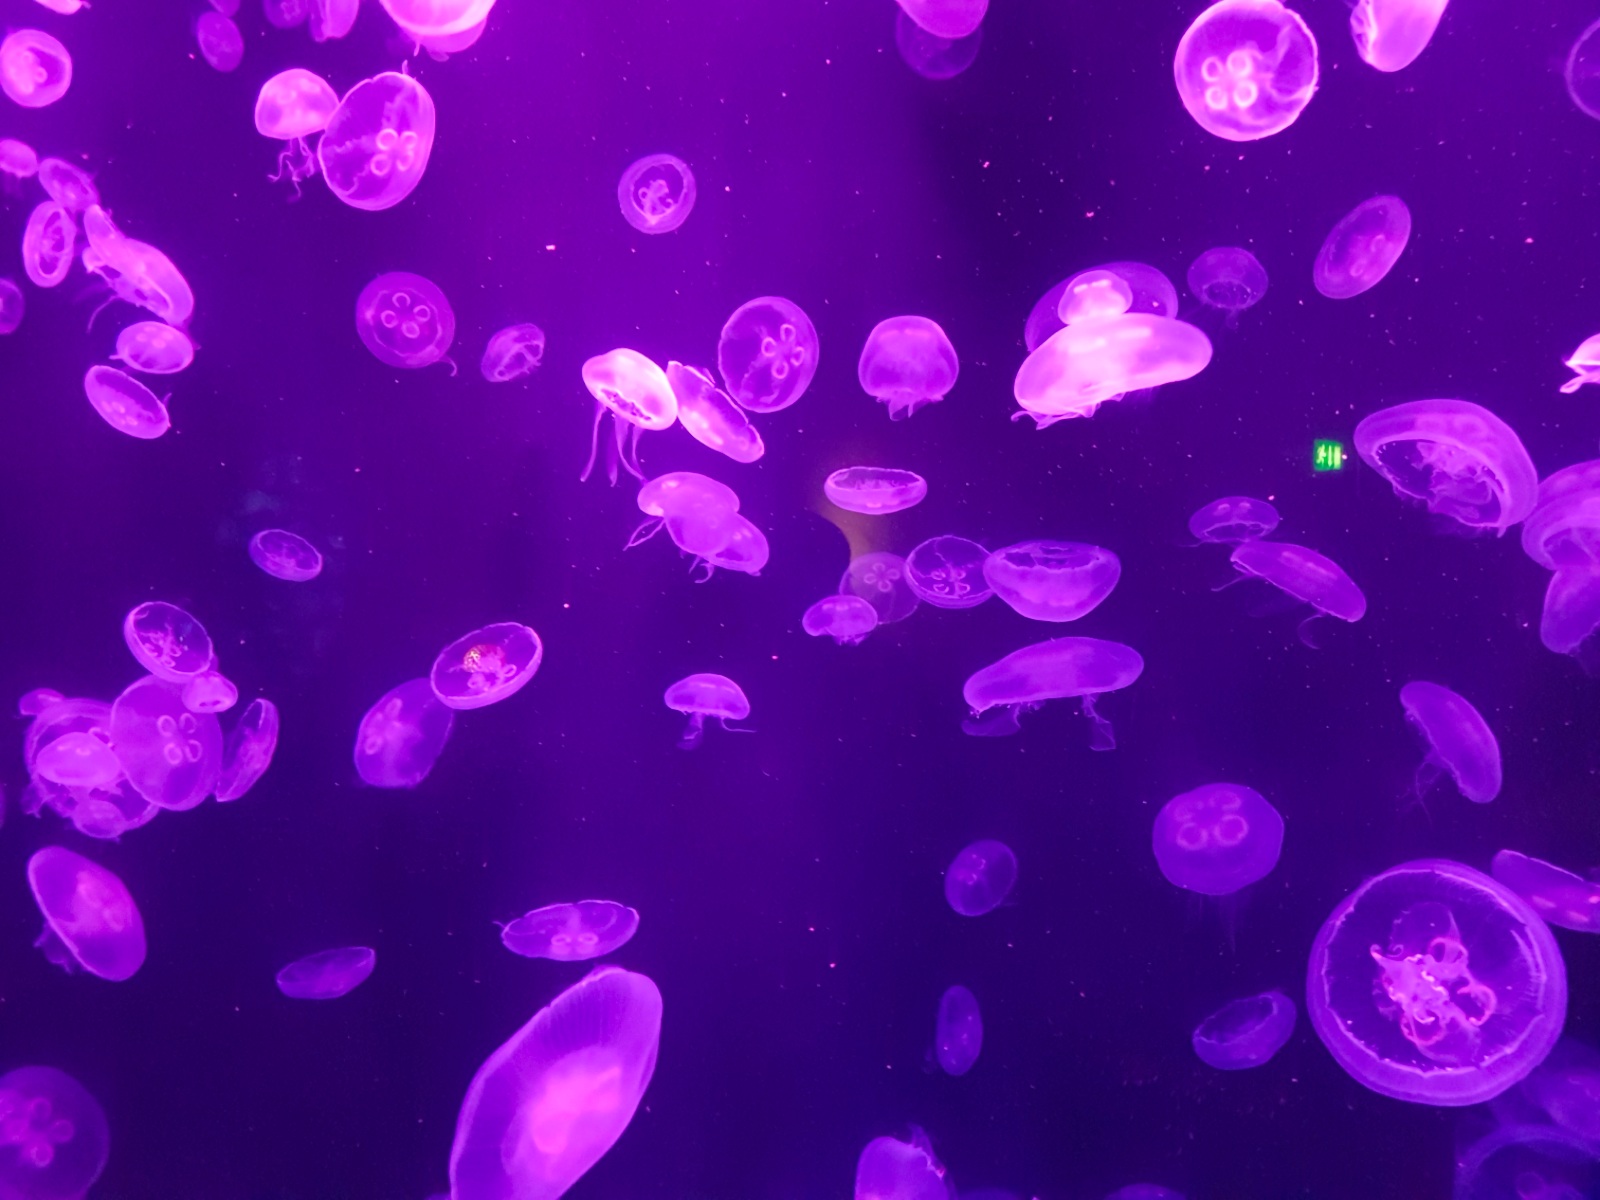 Lost Chambers Aquarium Dubai - Jelly fish